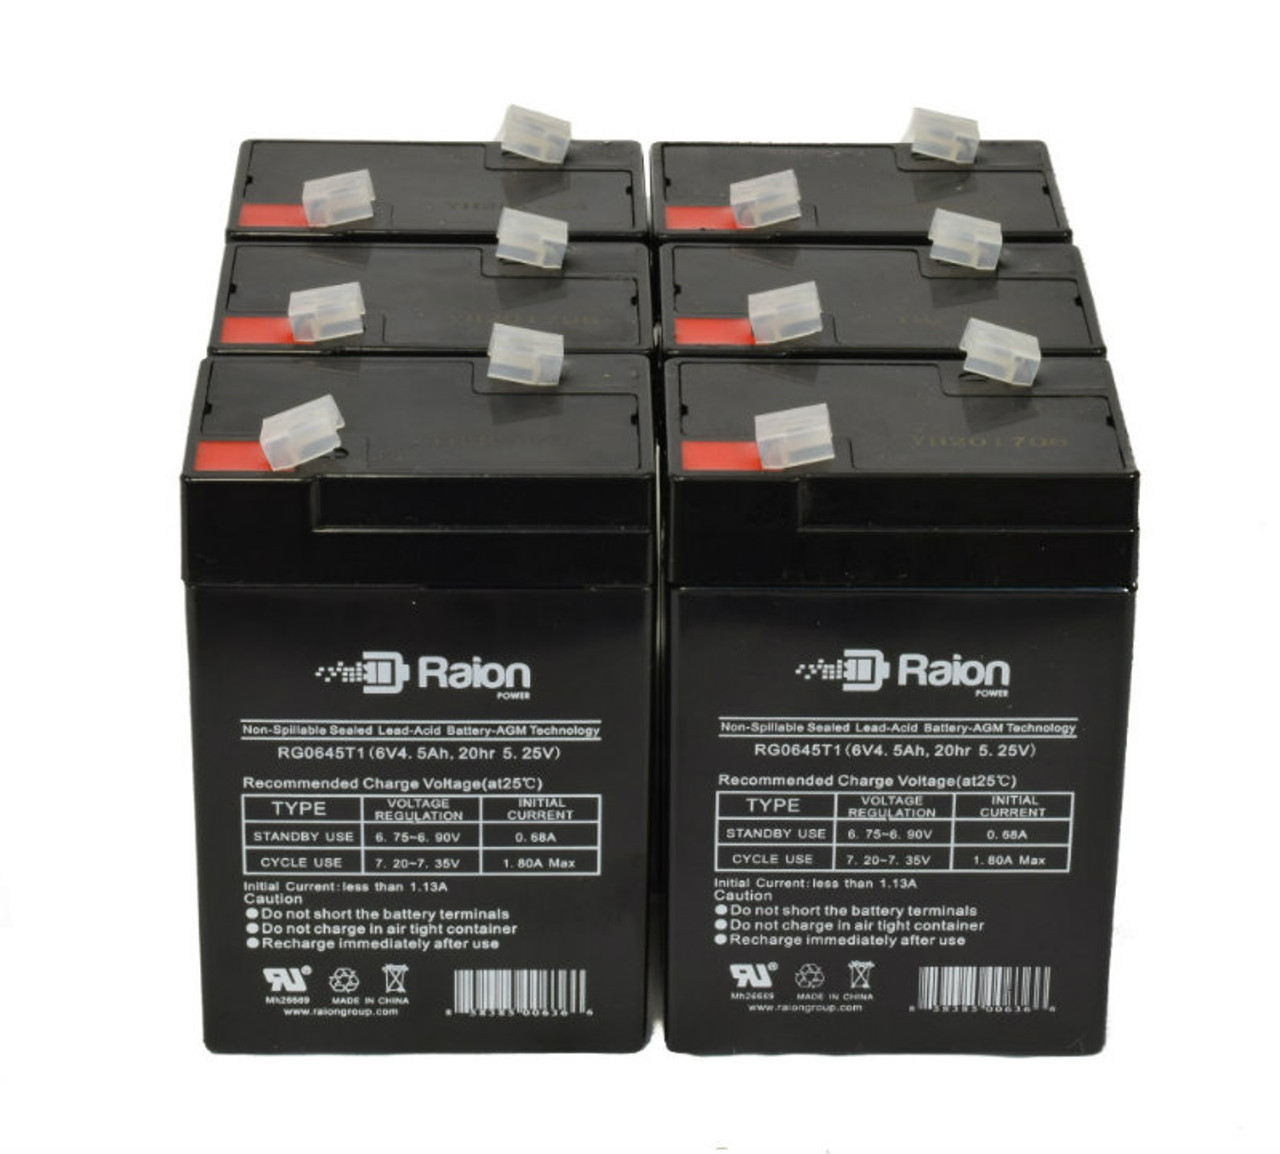 Raion Power 6 Volt 4.5Ah RG0645T1 Replacement Battery for HKBil 3FM6.0 - 6 Pack